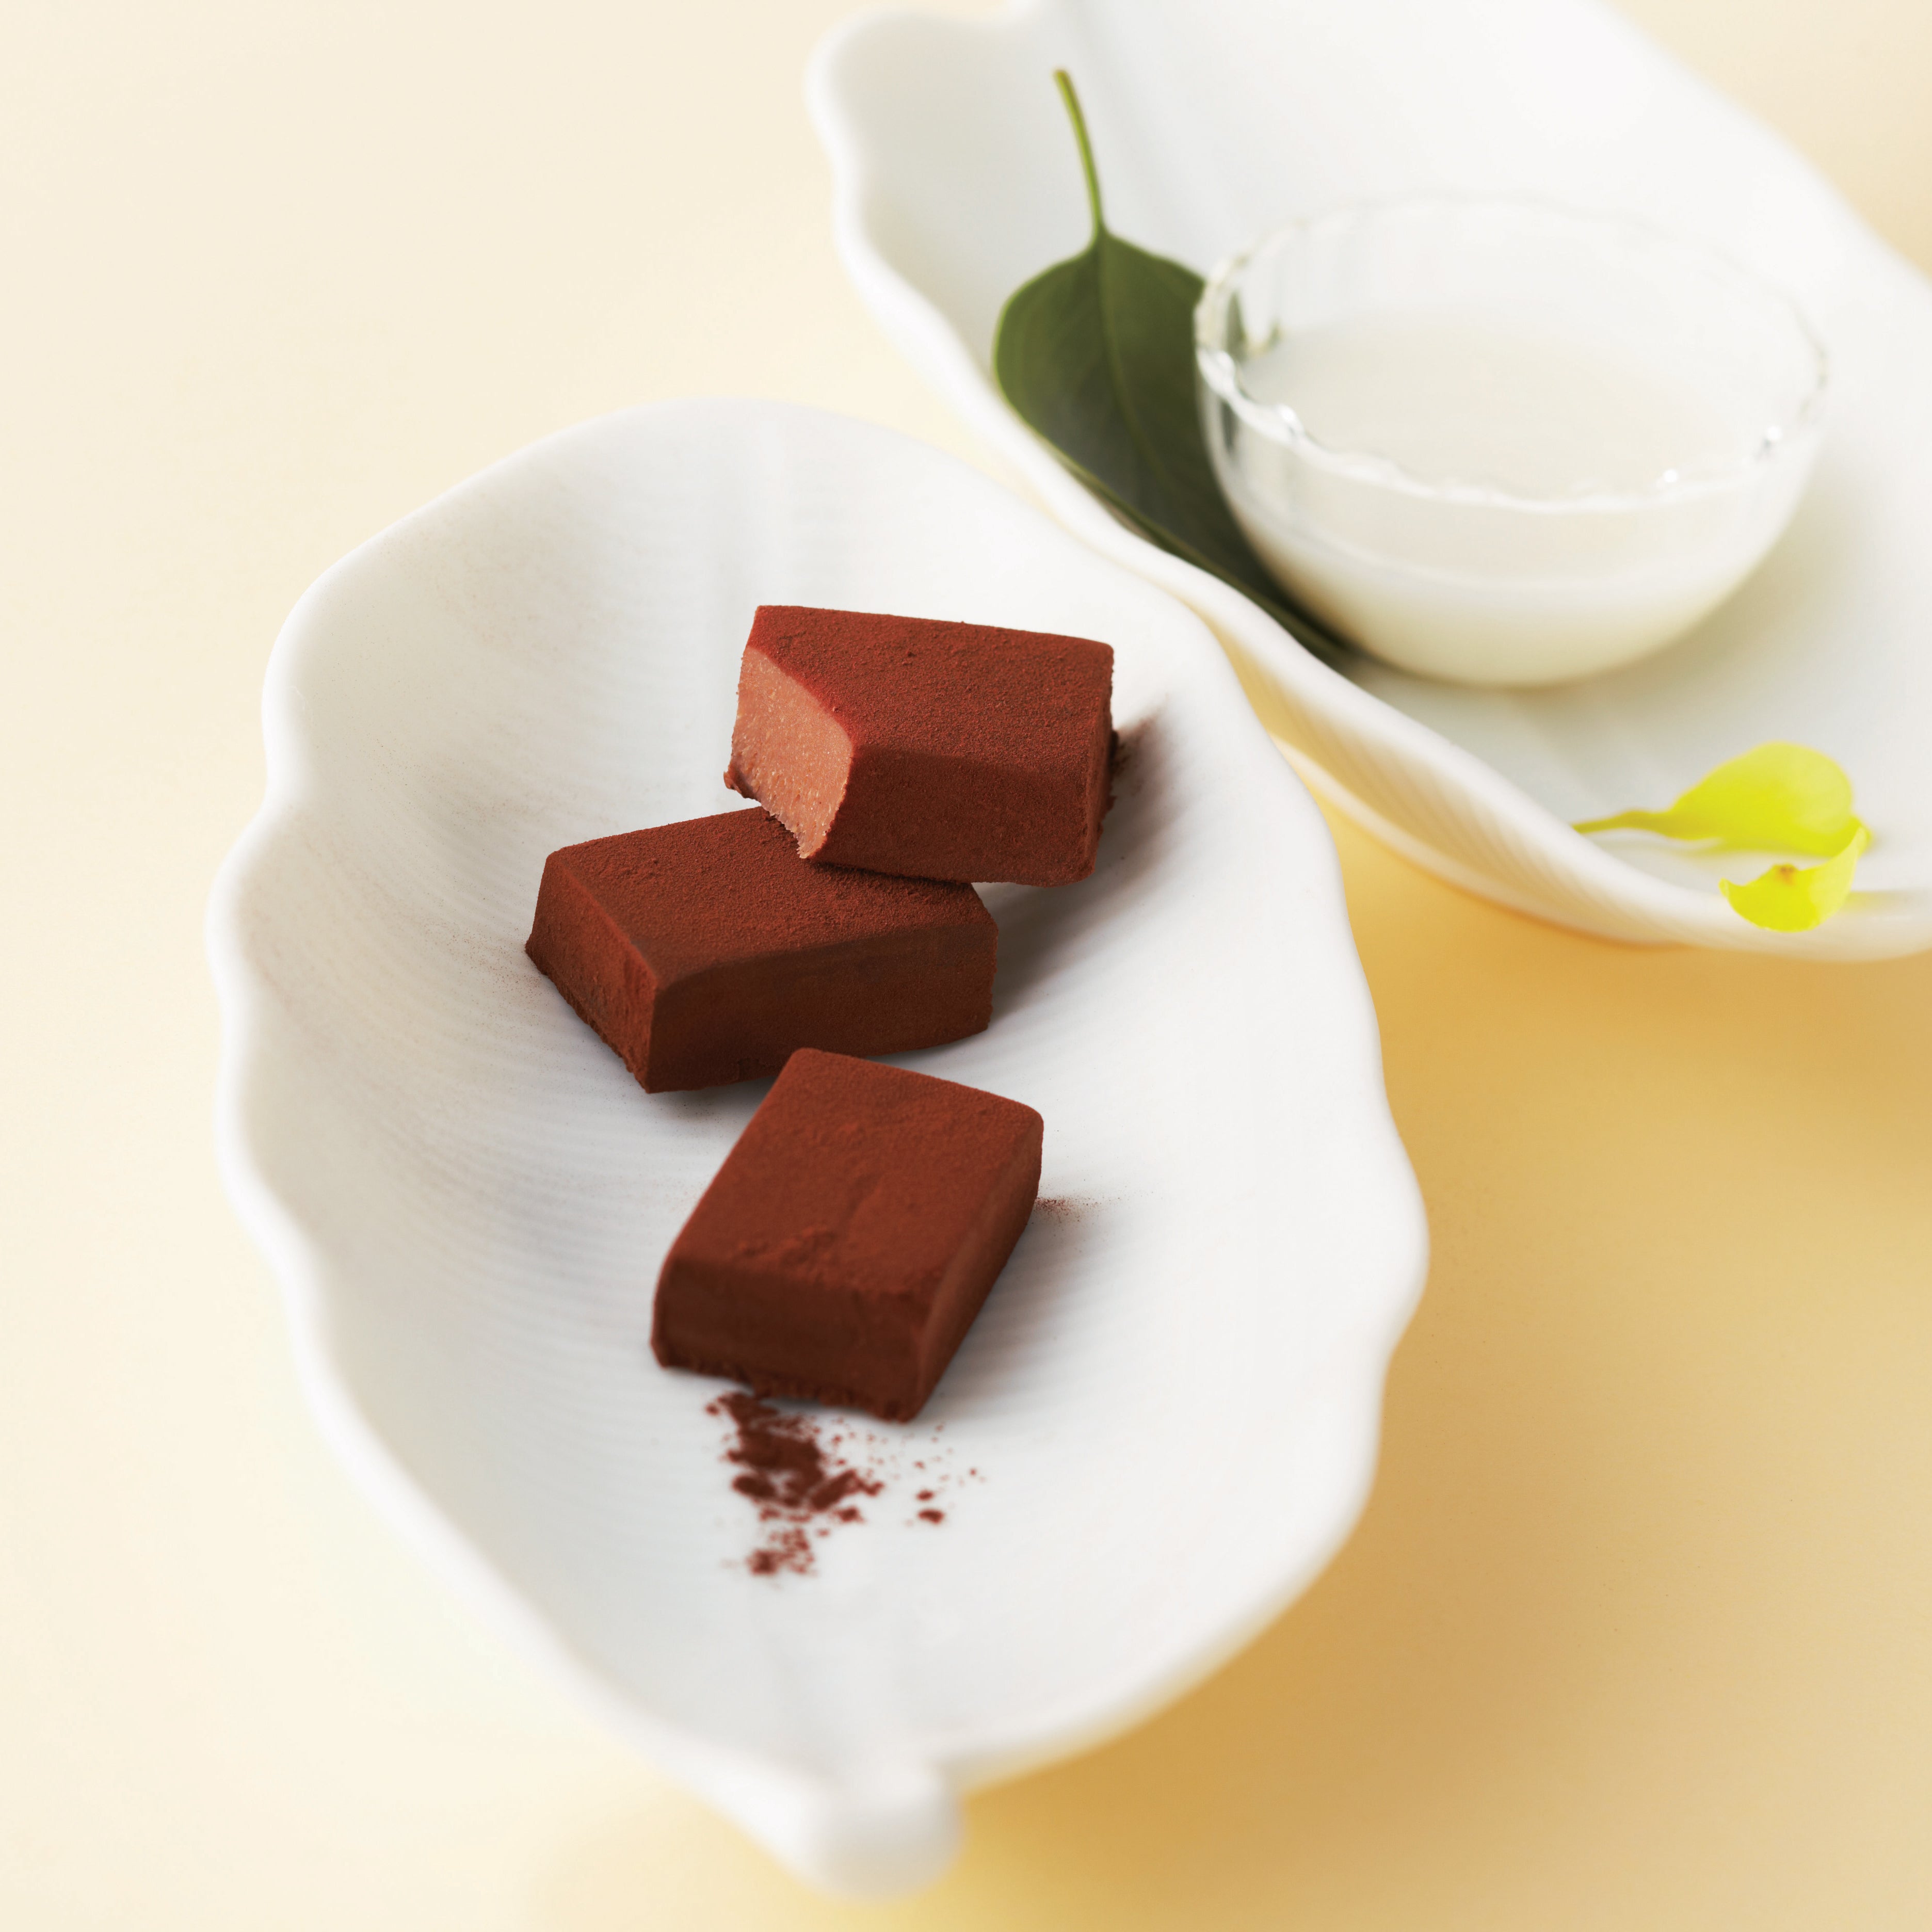 Image shows ROYCE' Nama Chocolate blocks on a plate.